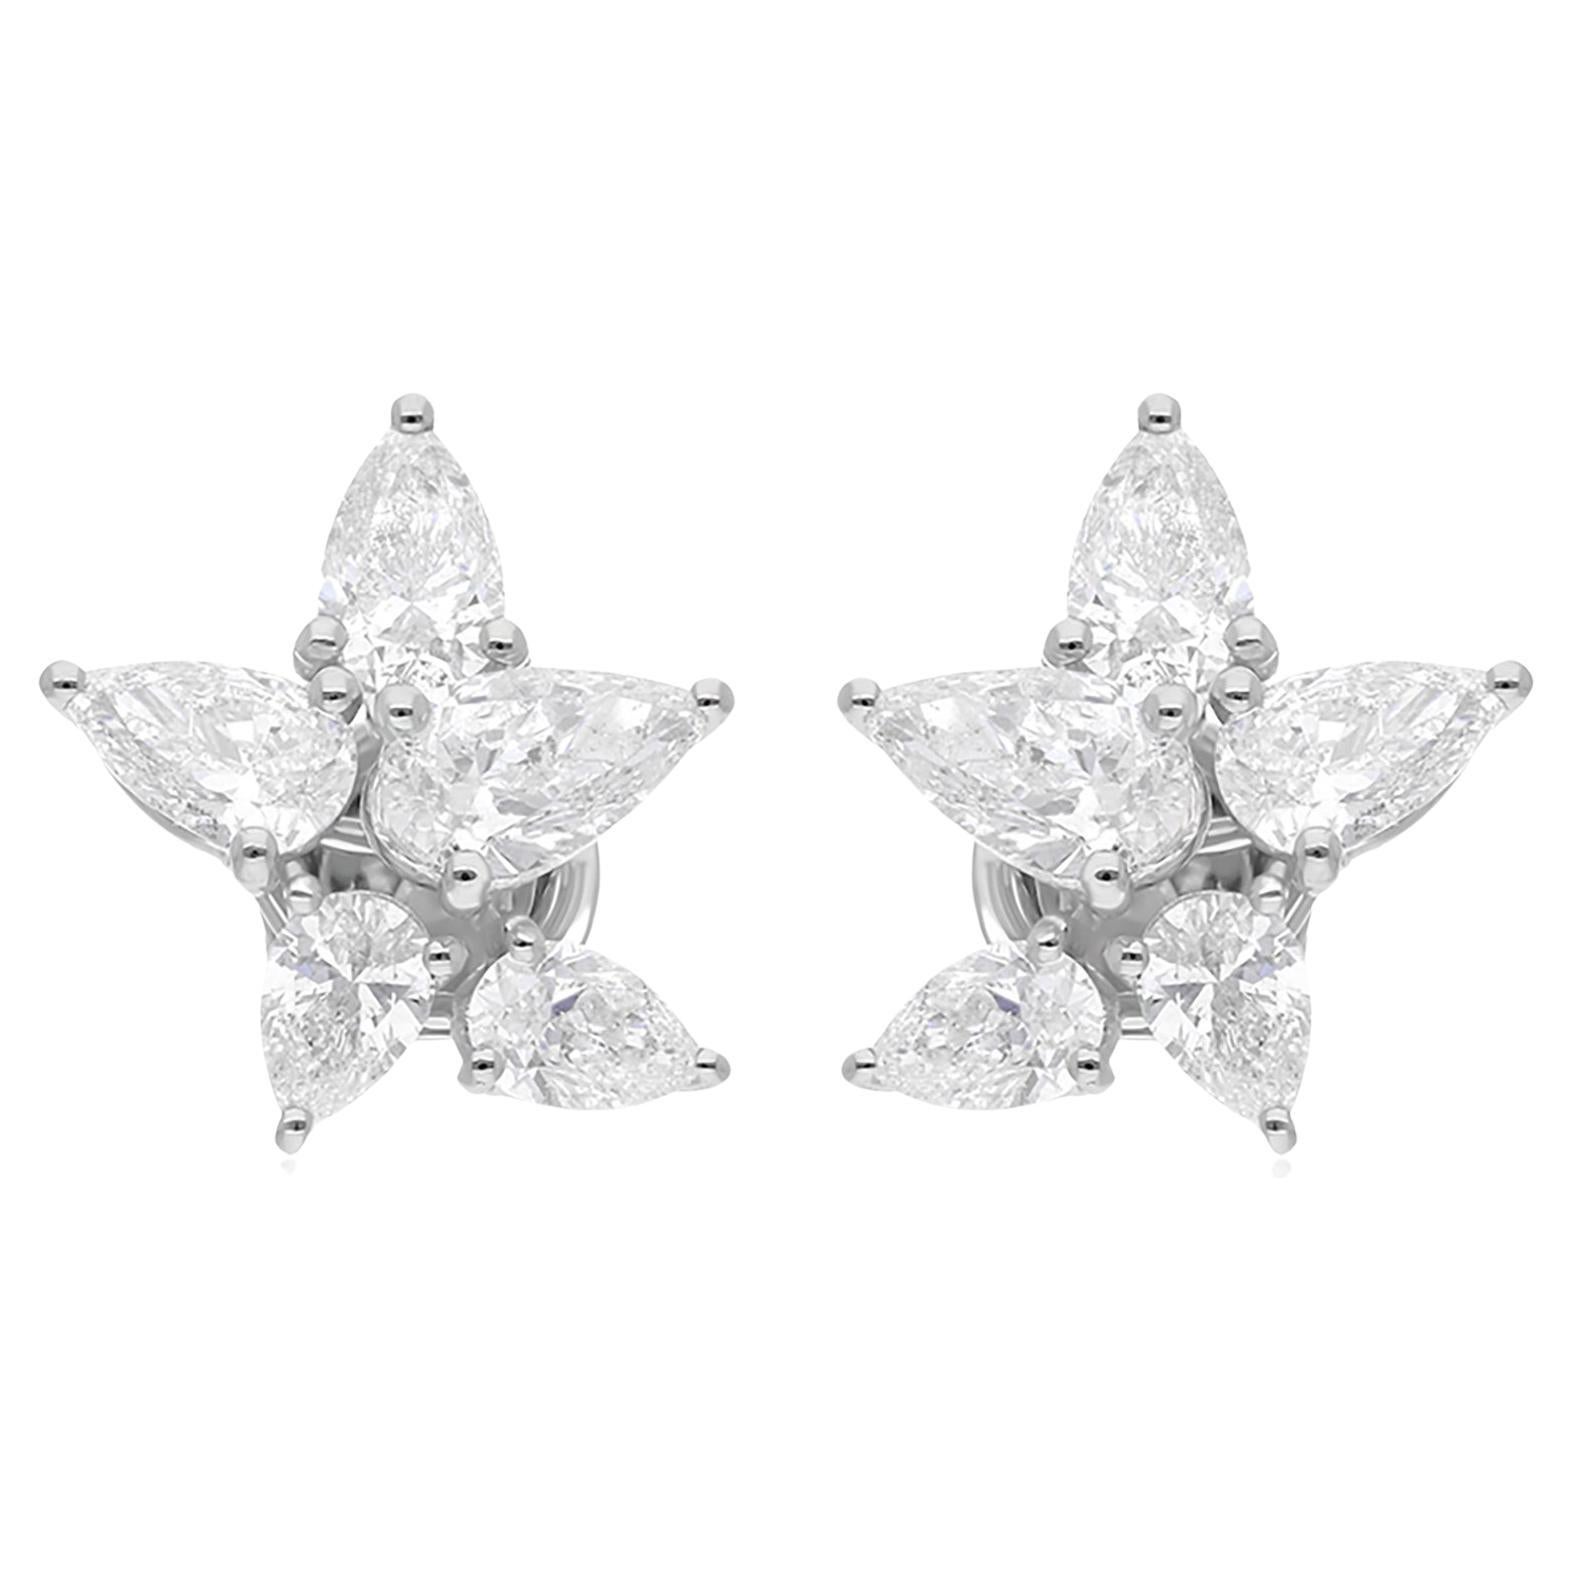 3.21 Ct. SI Clarity HI Color Pear Diamond Stud Earrings 18 Karat White Gold